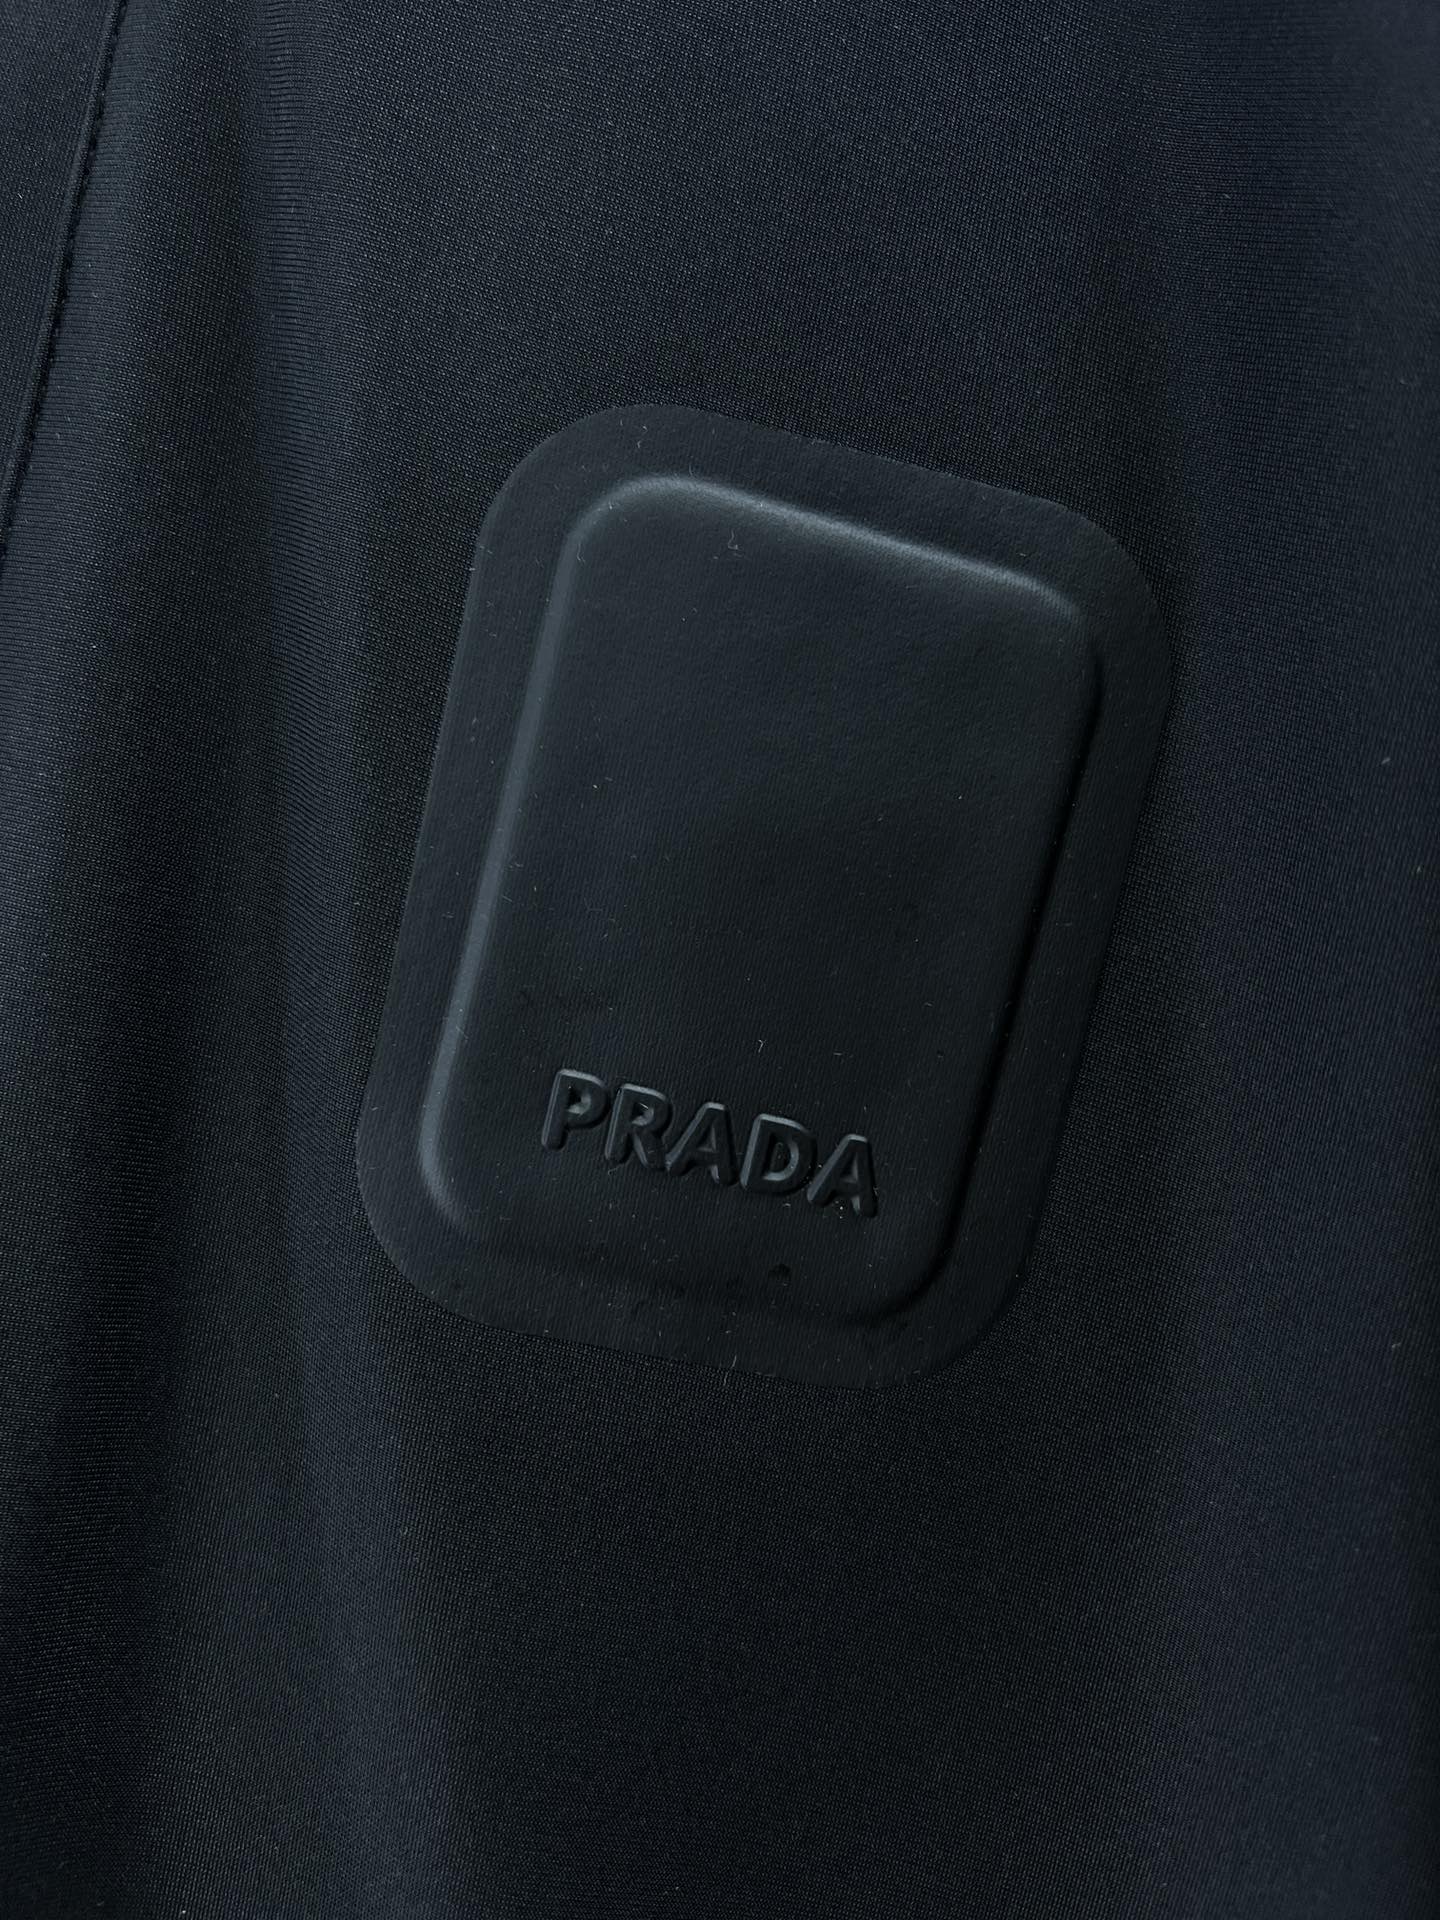 Prada普拉达23SS秋冬P家中长款羽绒外套采用90国标白鸭绒版型绝对正在品质这块决不含糊原版1:1定